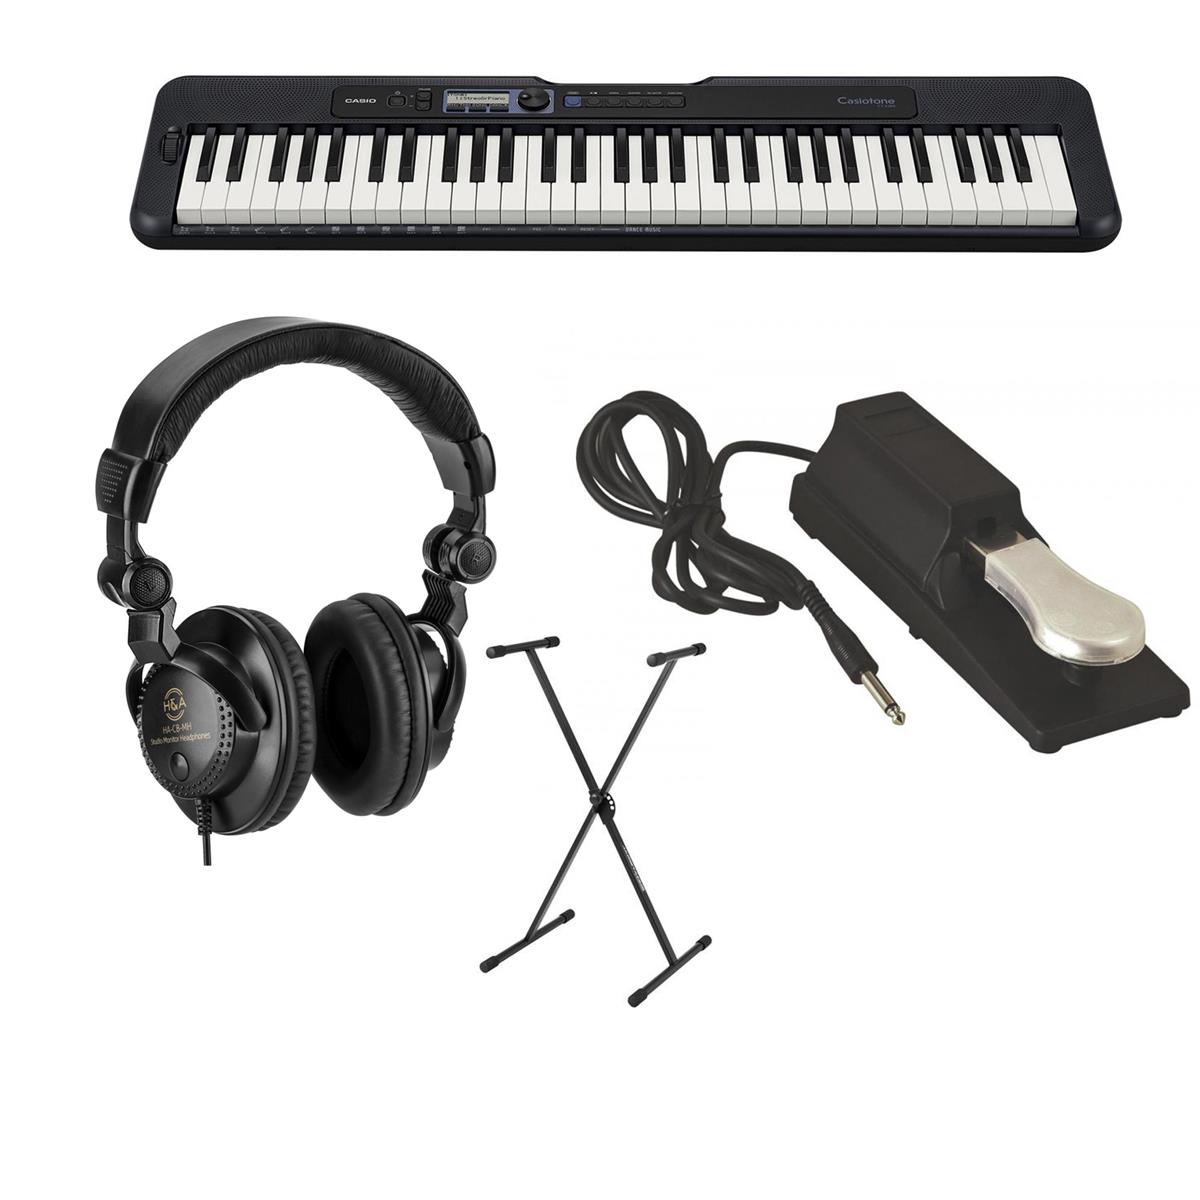 Image of Casio CT-S300 61-Key Piano Style Keyboard